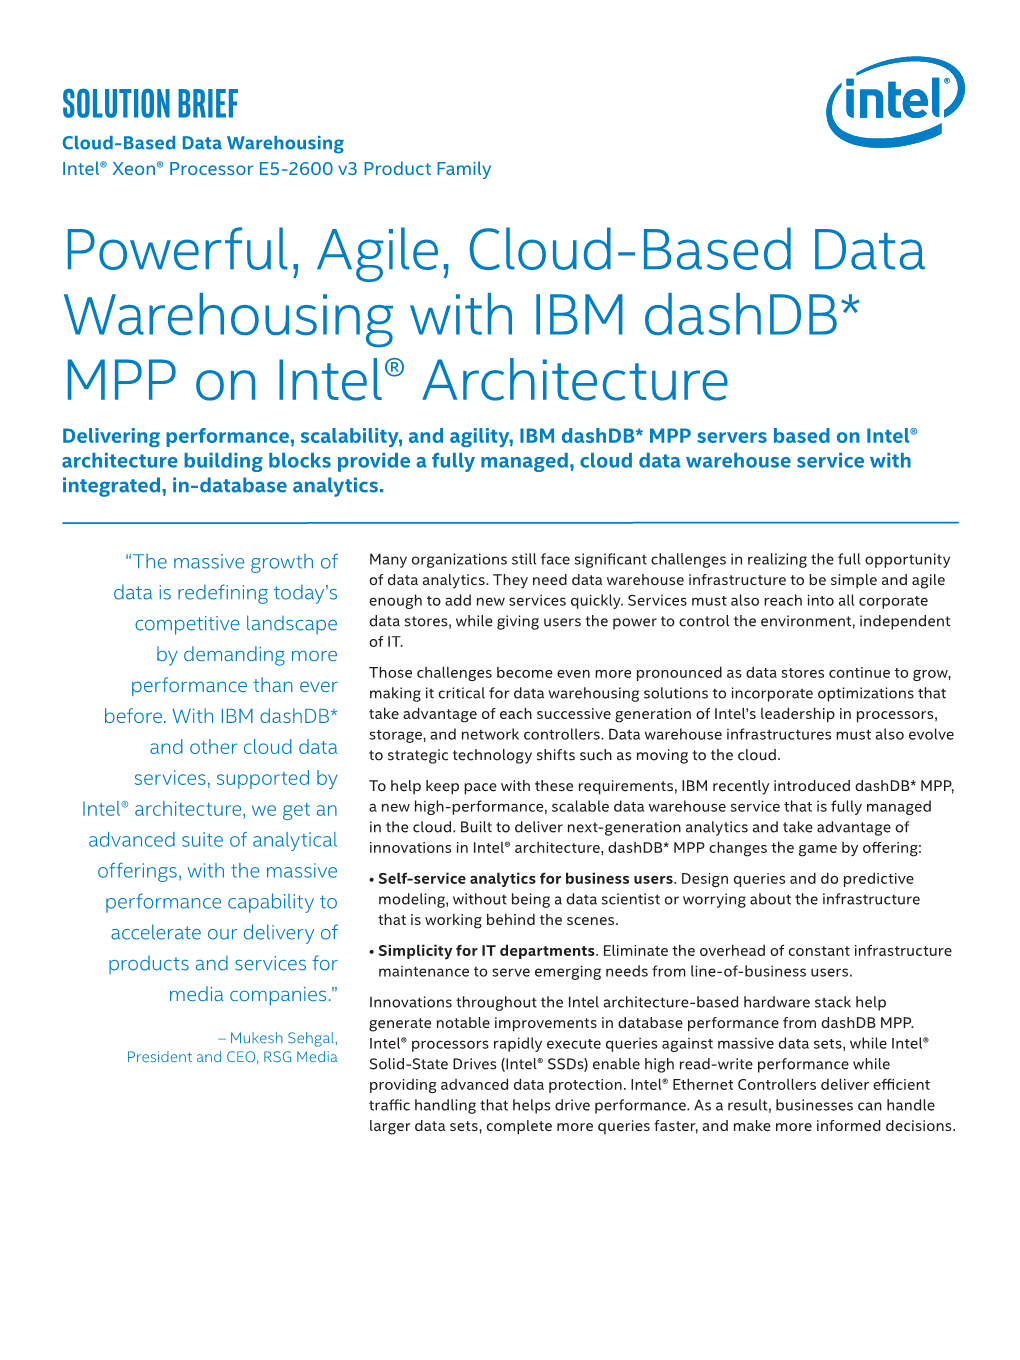 Cloud-Based Data Warehousing with IBM Dashdb* MPP and Intel